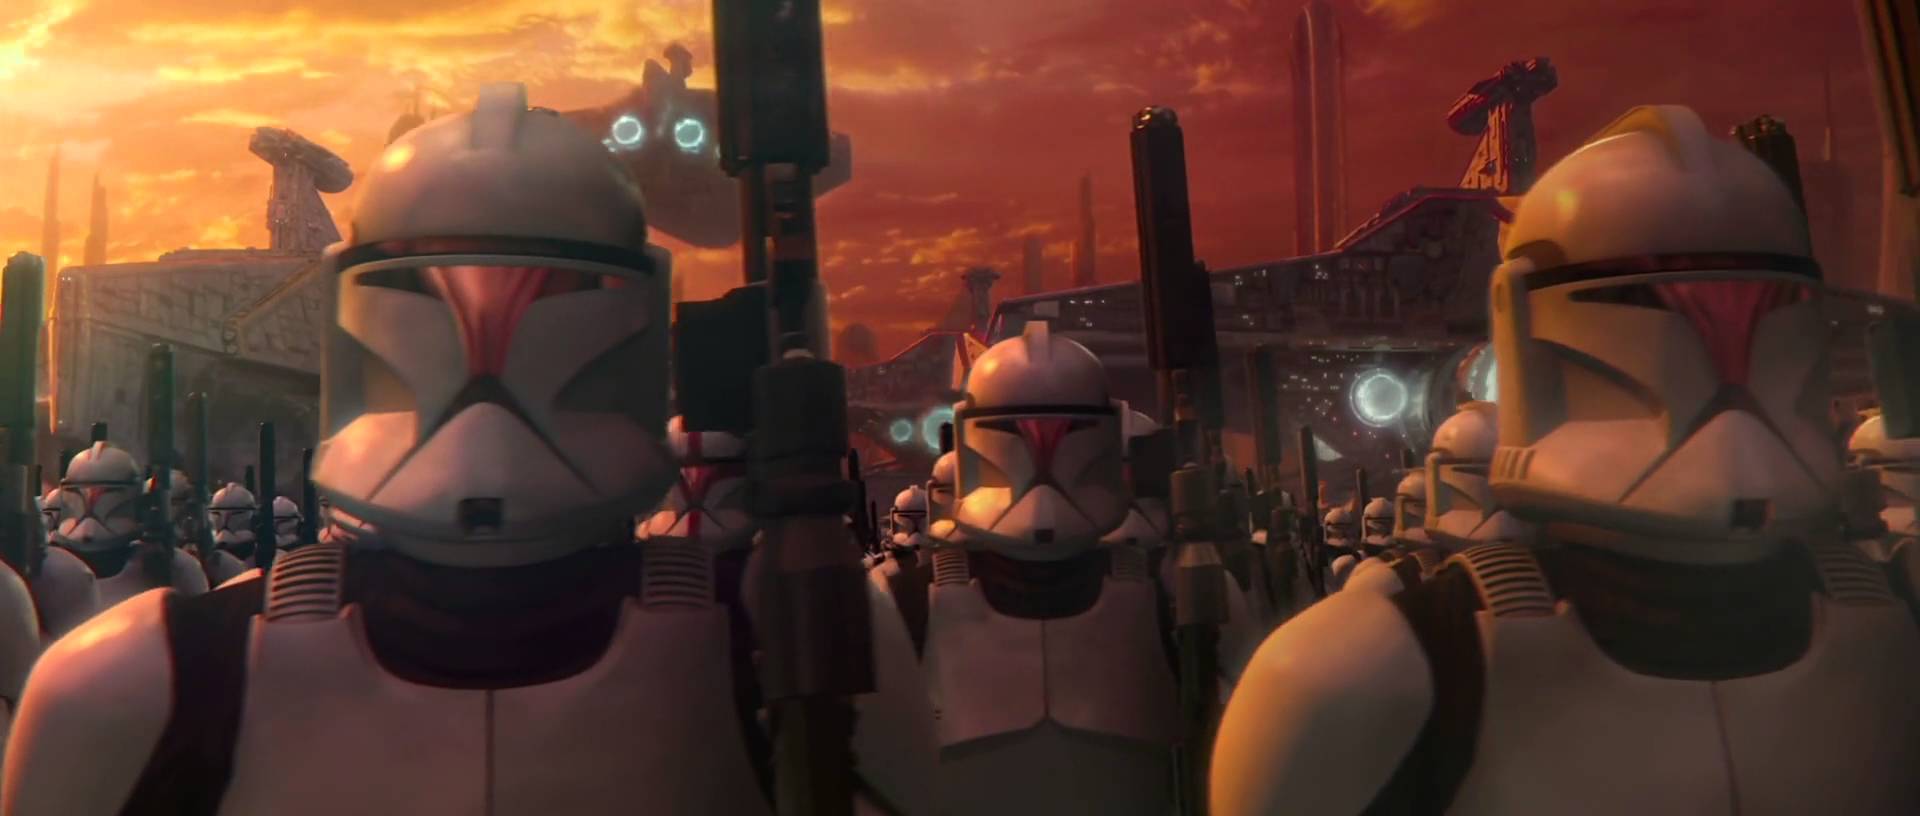 Star Wars Episode II - Attack of the Clones: Begun the Clone War has 1